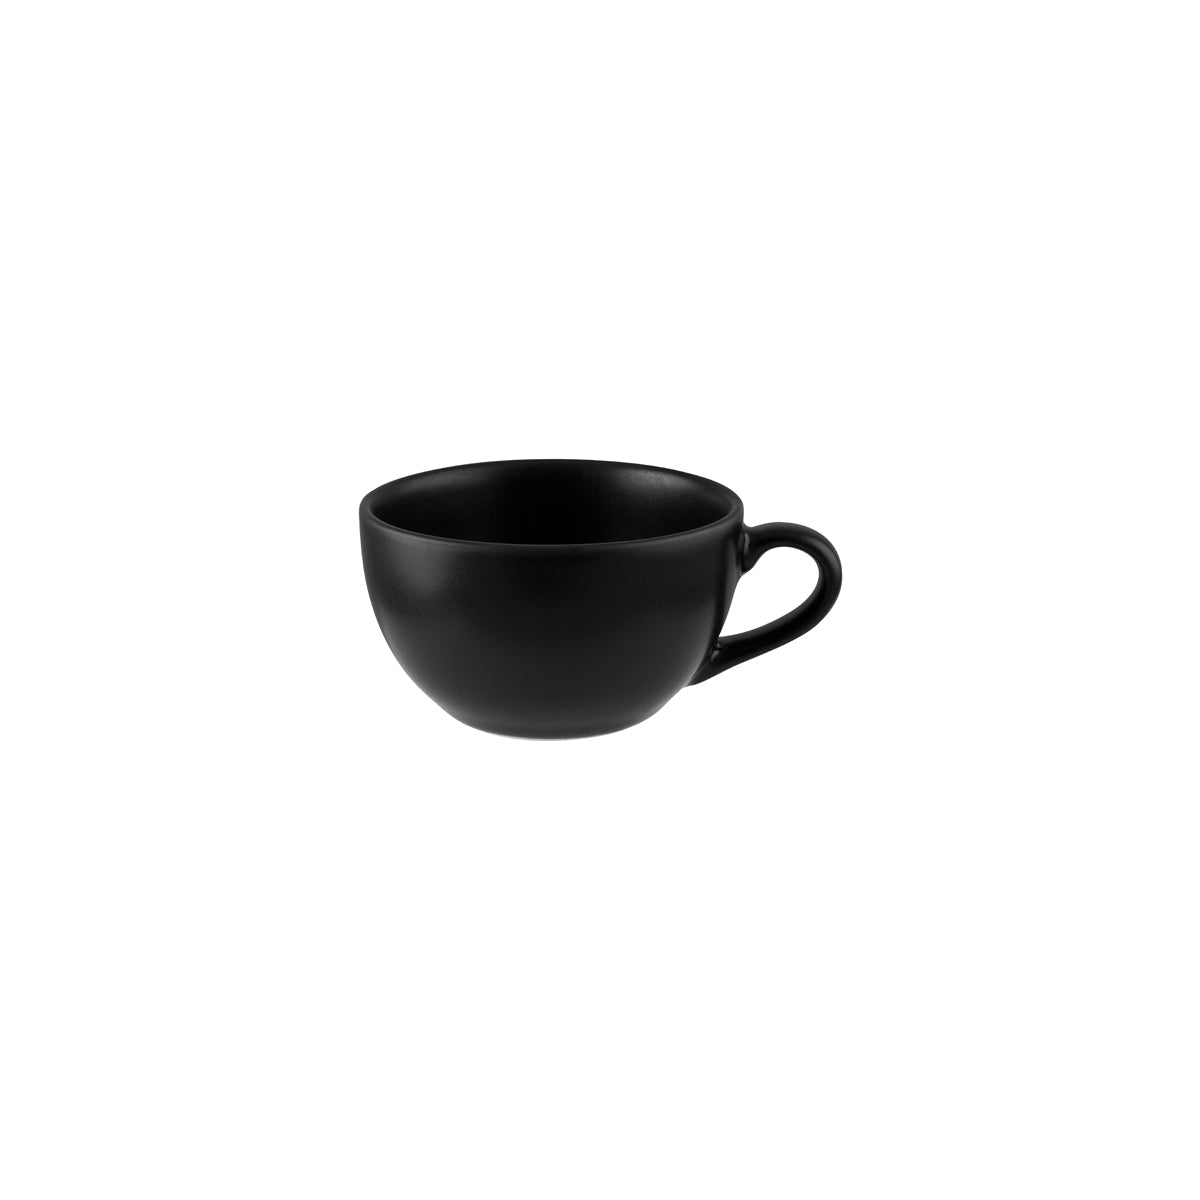 130783 Bonna Notte Black Rita Coffee Cup 97x55mm/250ml Tomkin Australia Hospitality Supplies